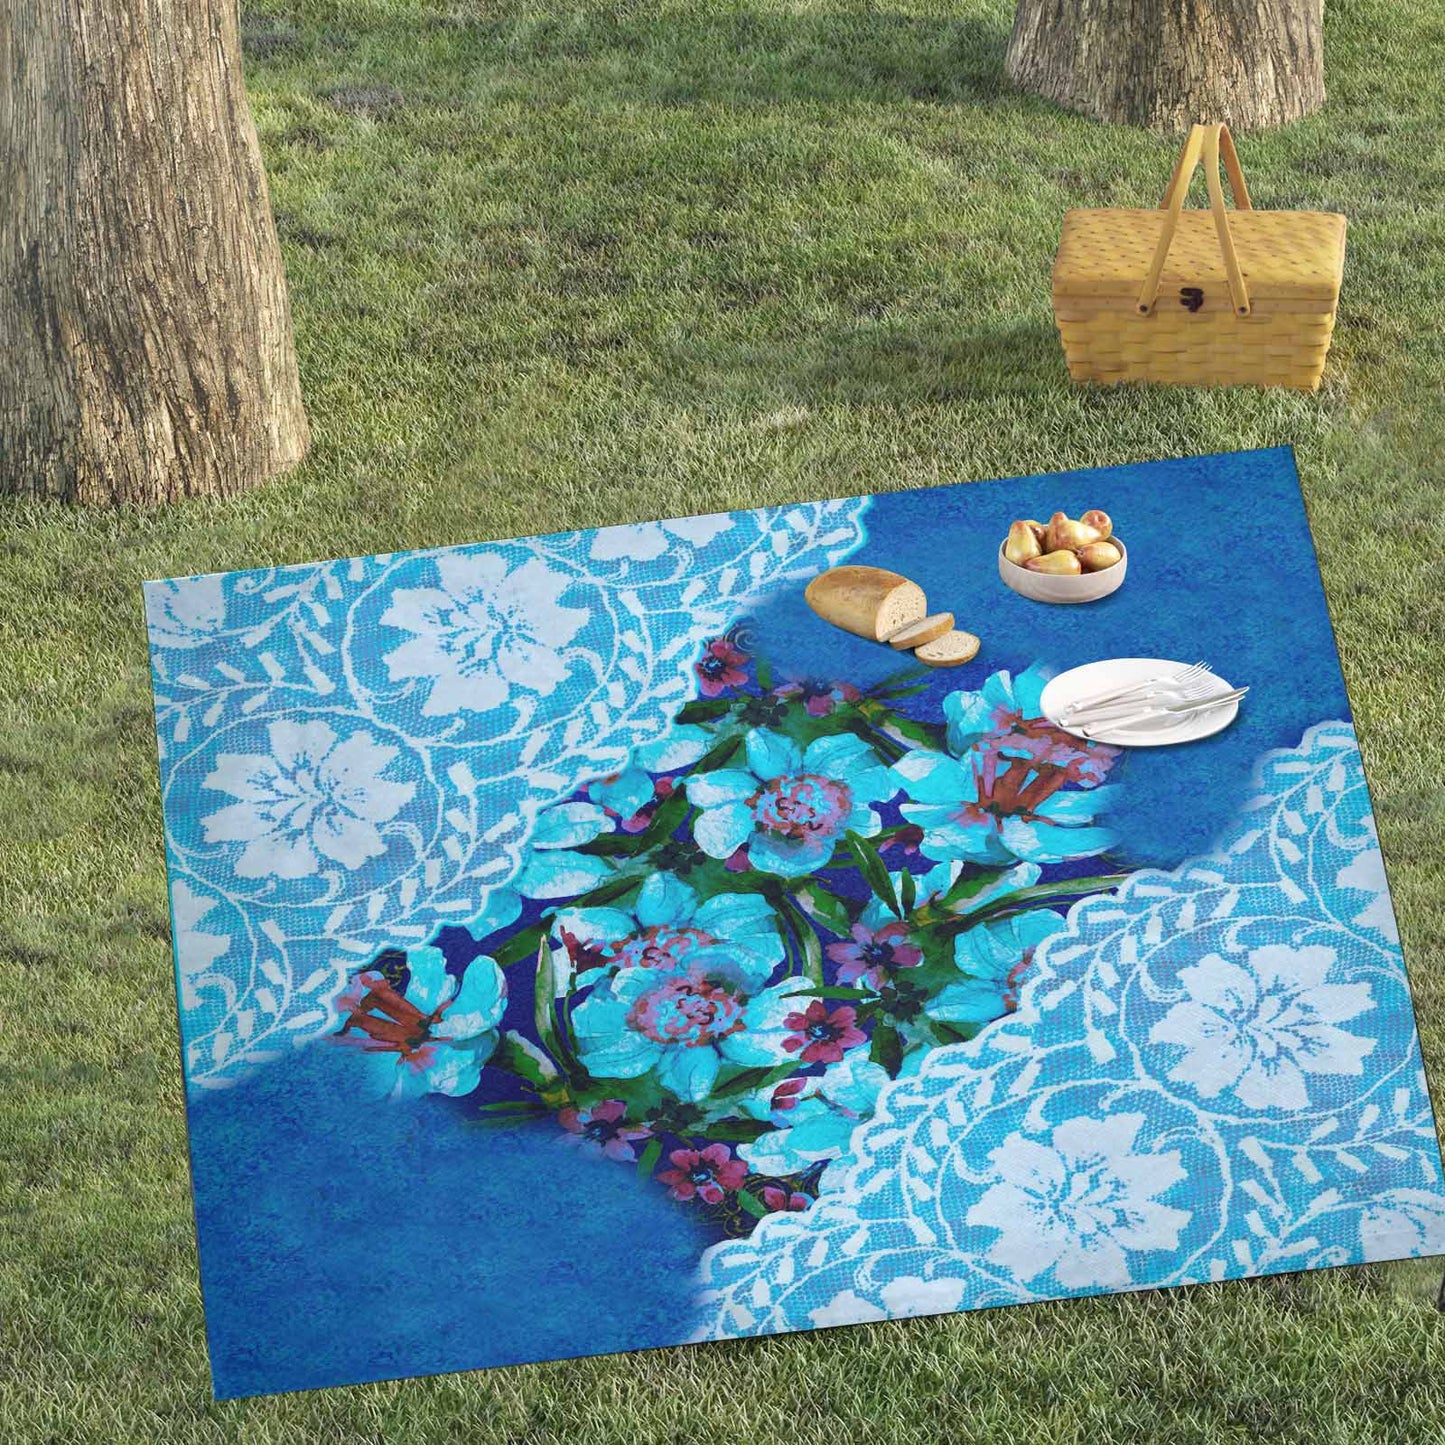 Victorian lace print waterproof picnic mat, 69 x 55in, design 49